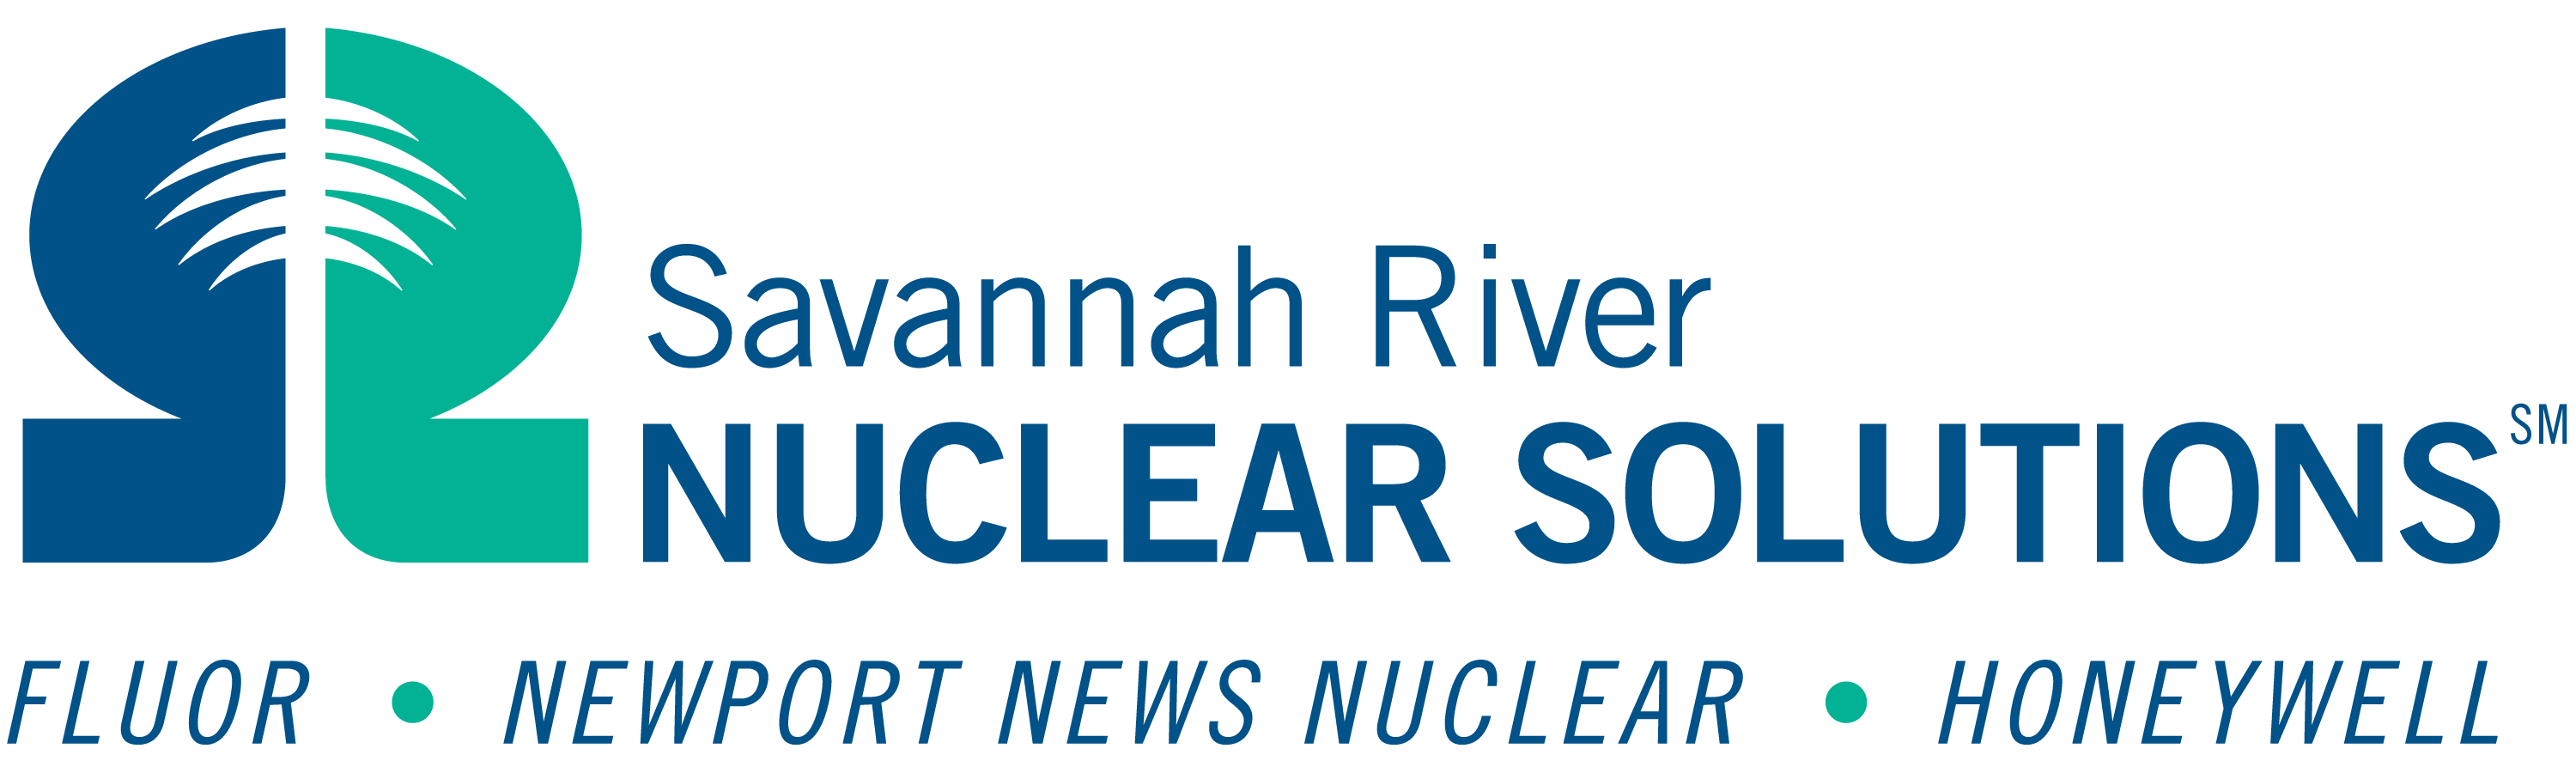 Savannah River Nuclear Solutions
Fluor
Newport News Nuclear
Honeywell